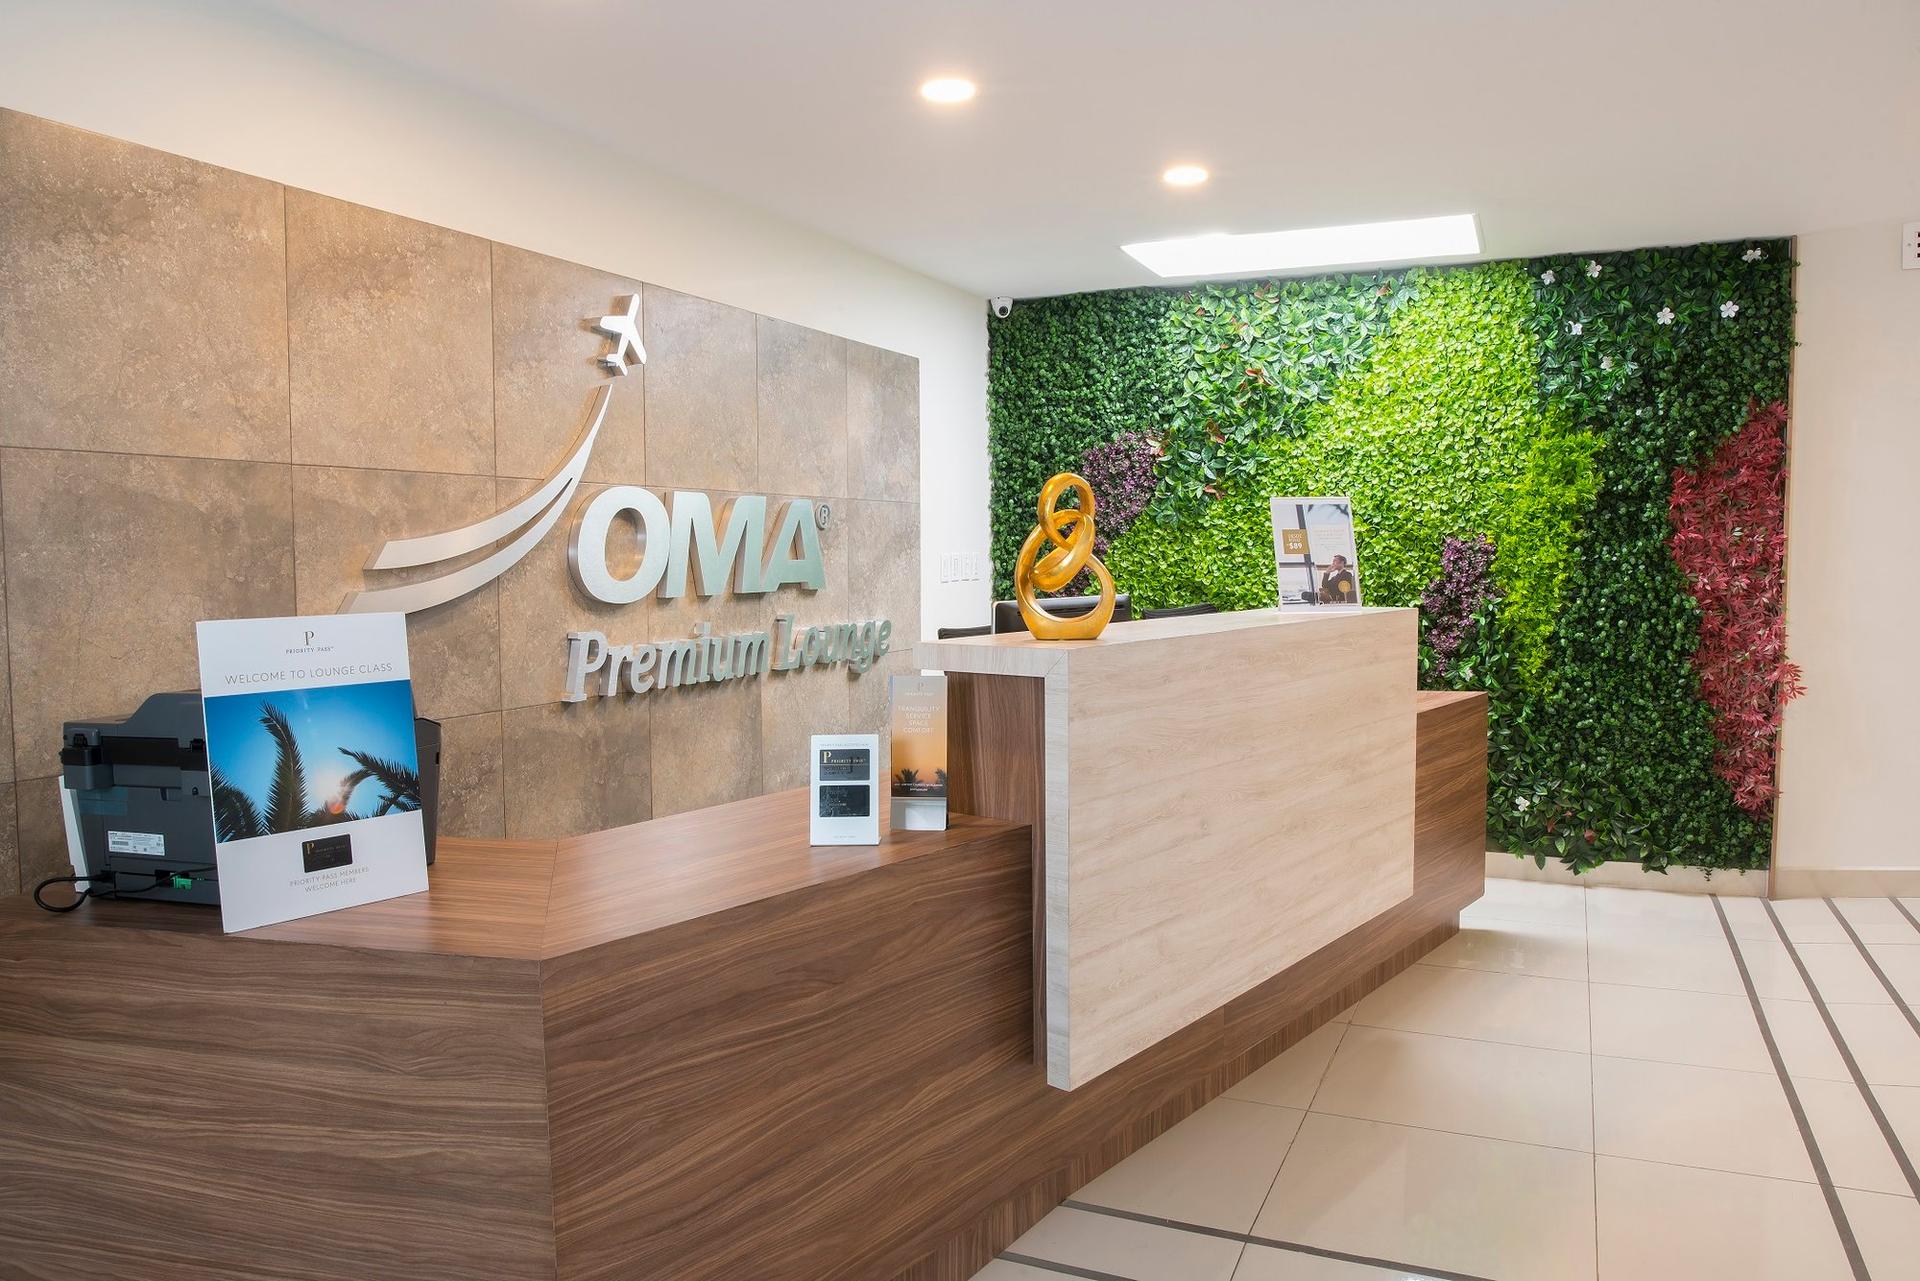 OMA Premium Lounge image 5 of 7